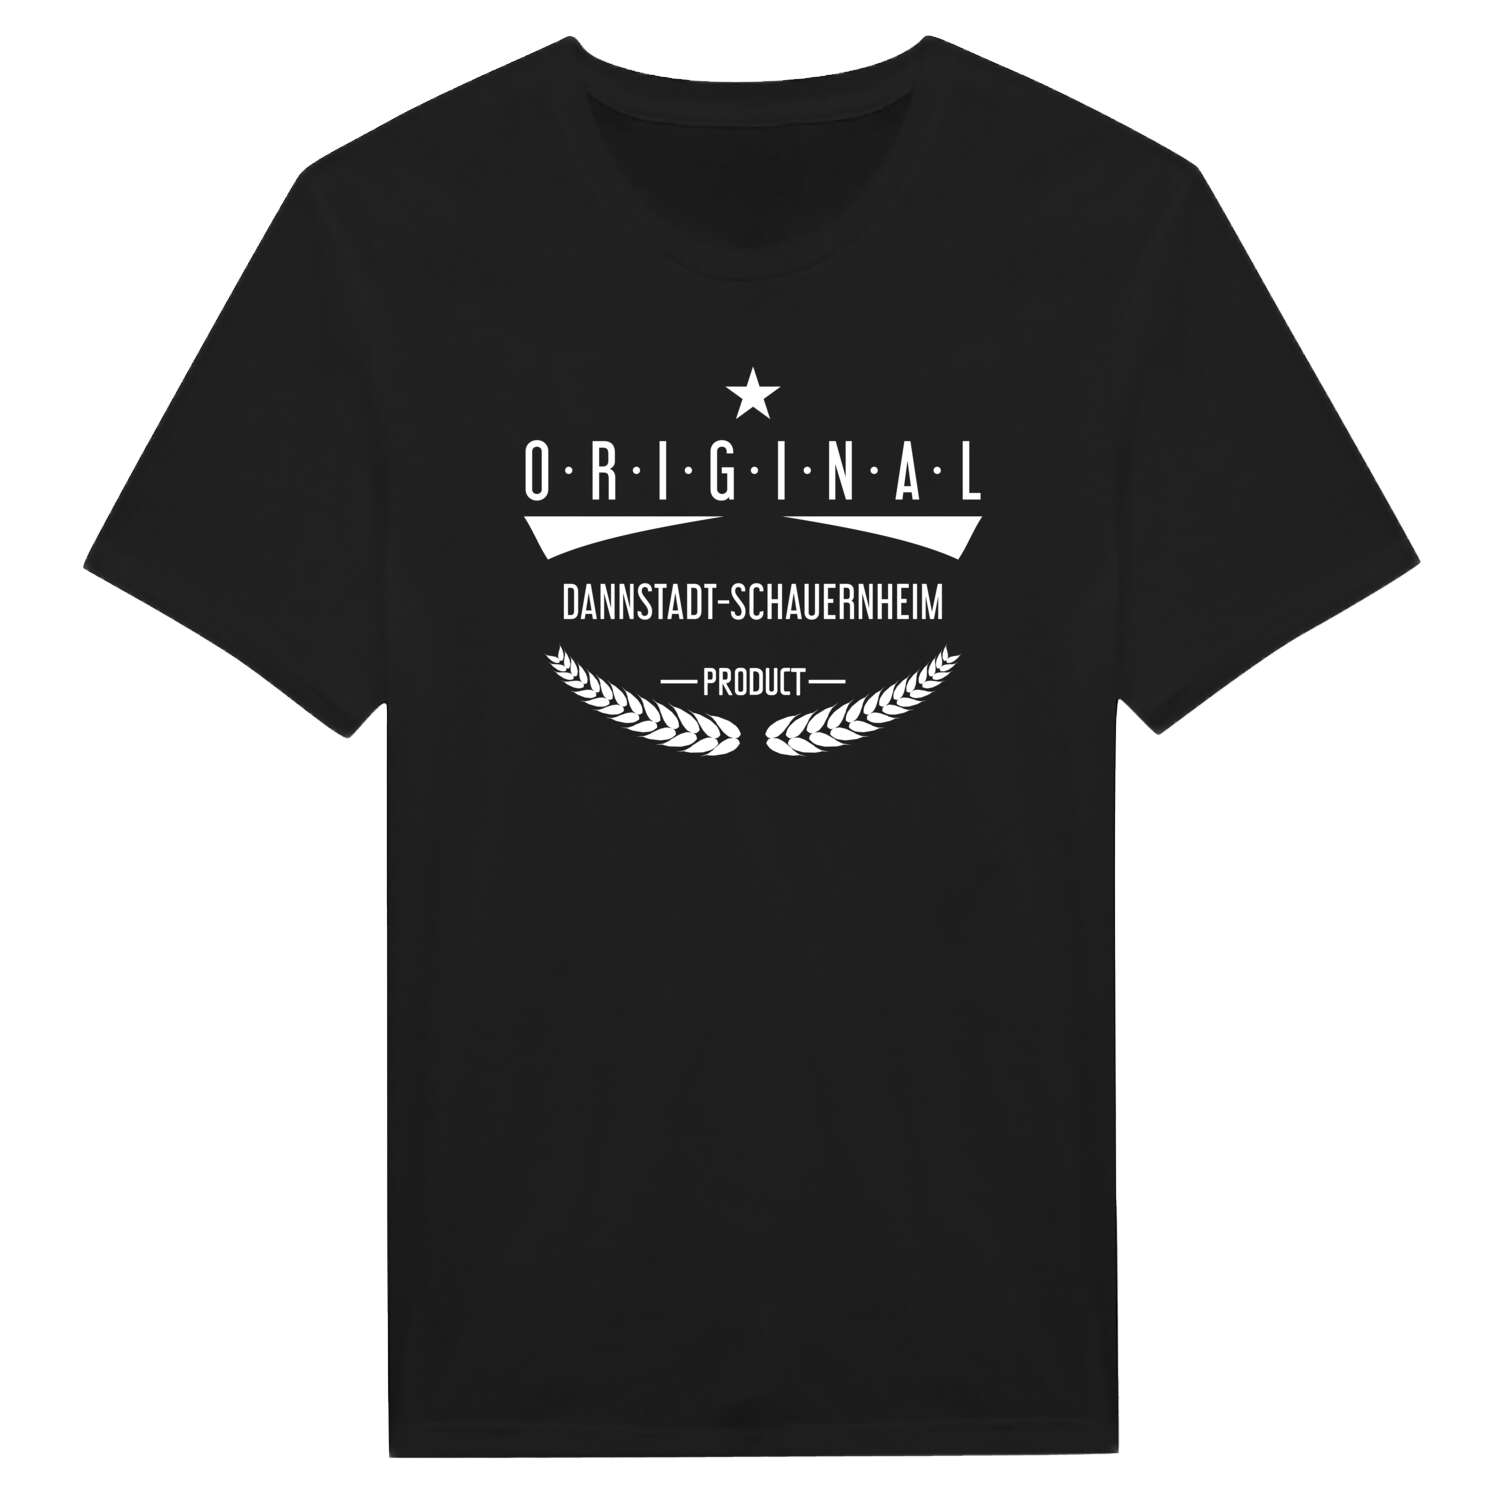 Dannstadt-Schauernheim T-Shirt »Original Product«